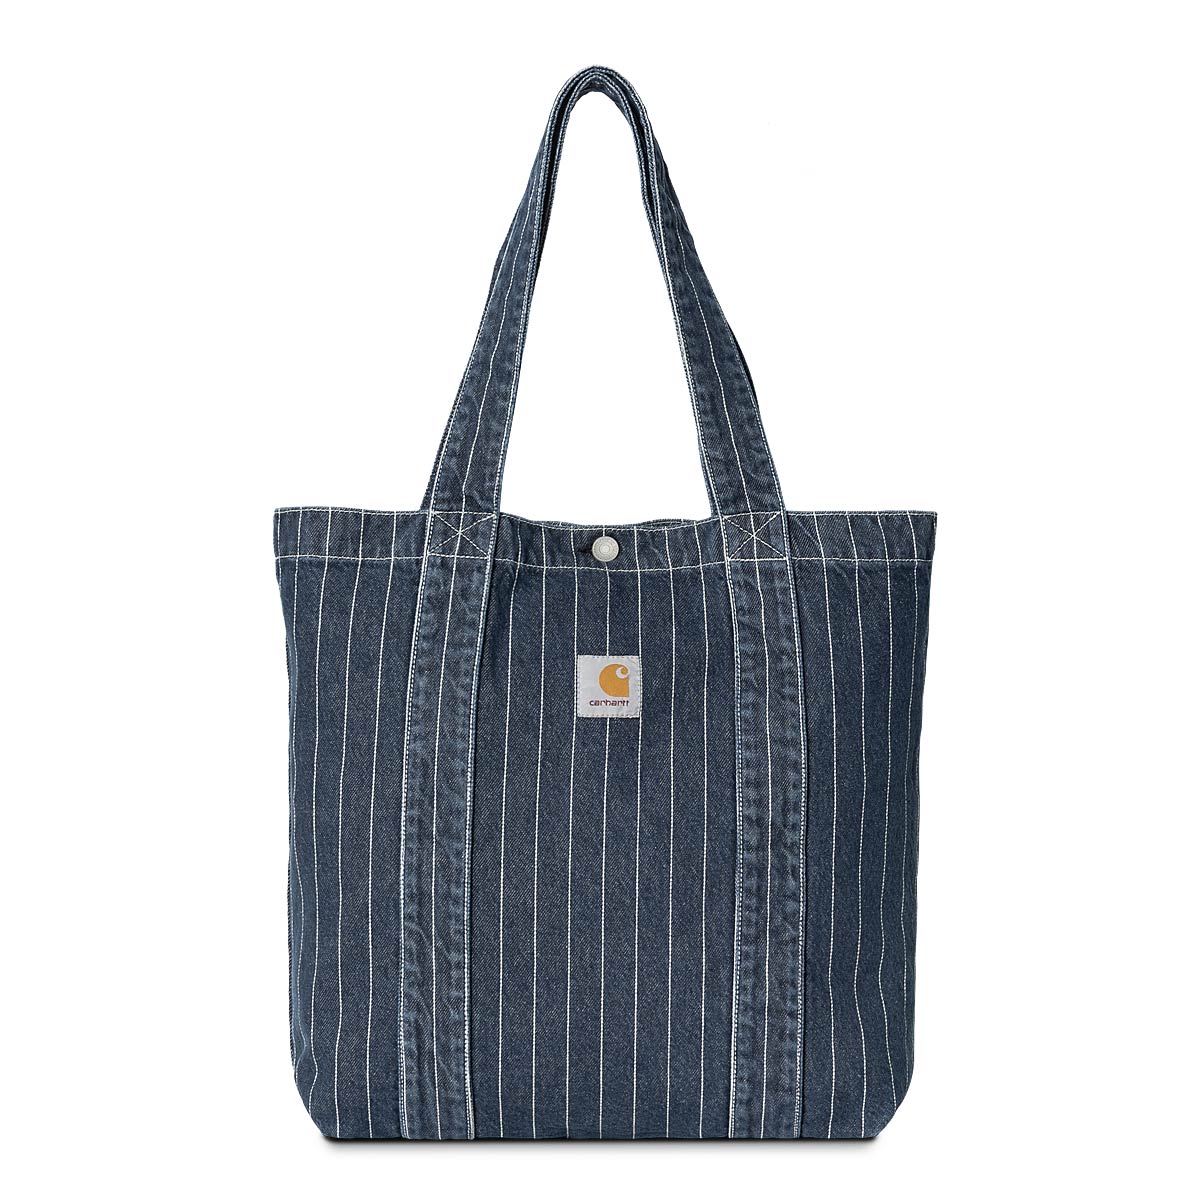 Buy Orlean Tote Bag on KICKZ.com!